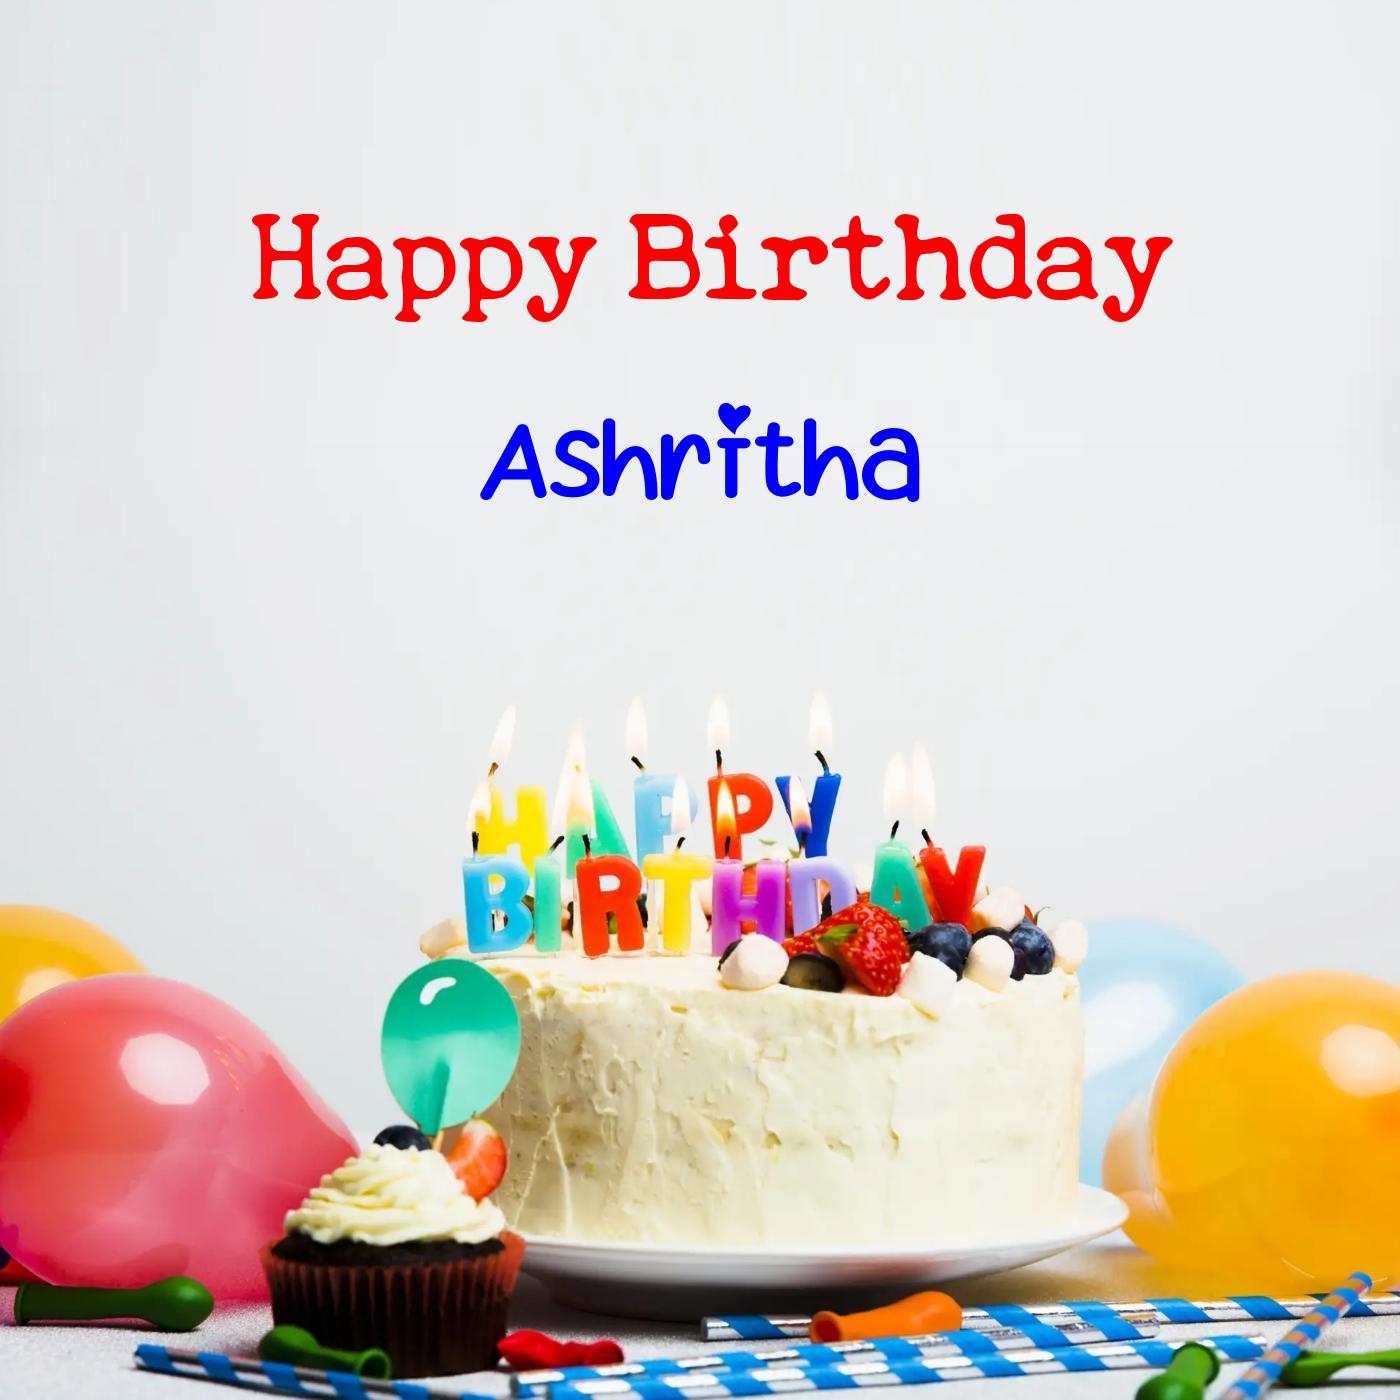 Happy Birthday Ashritha Cake Balloons Card